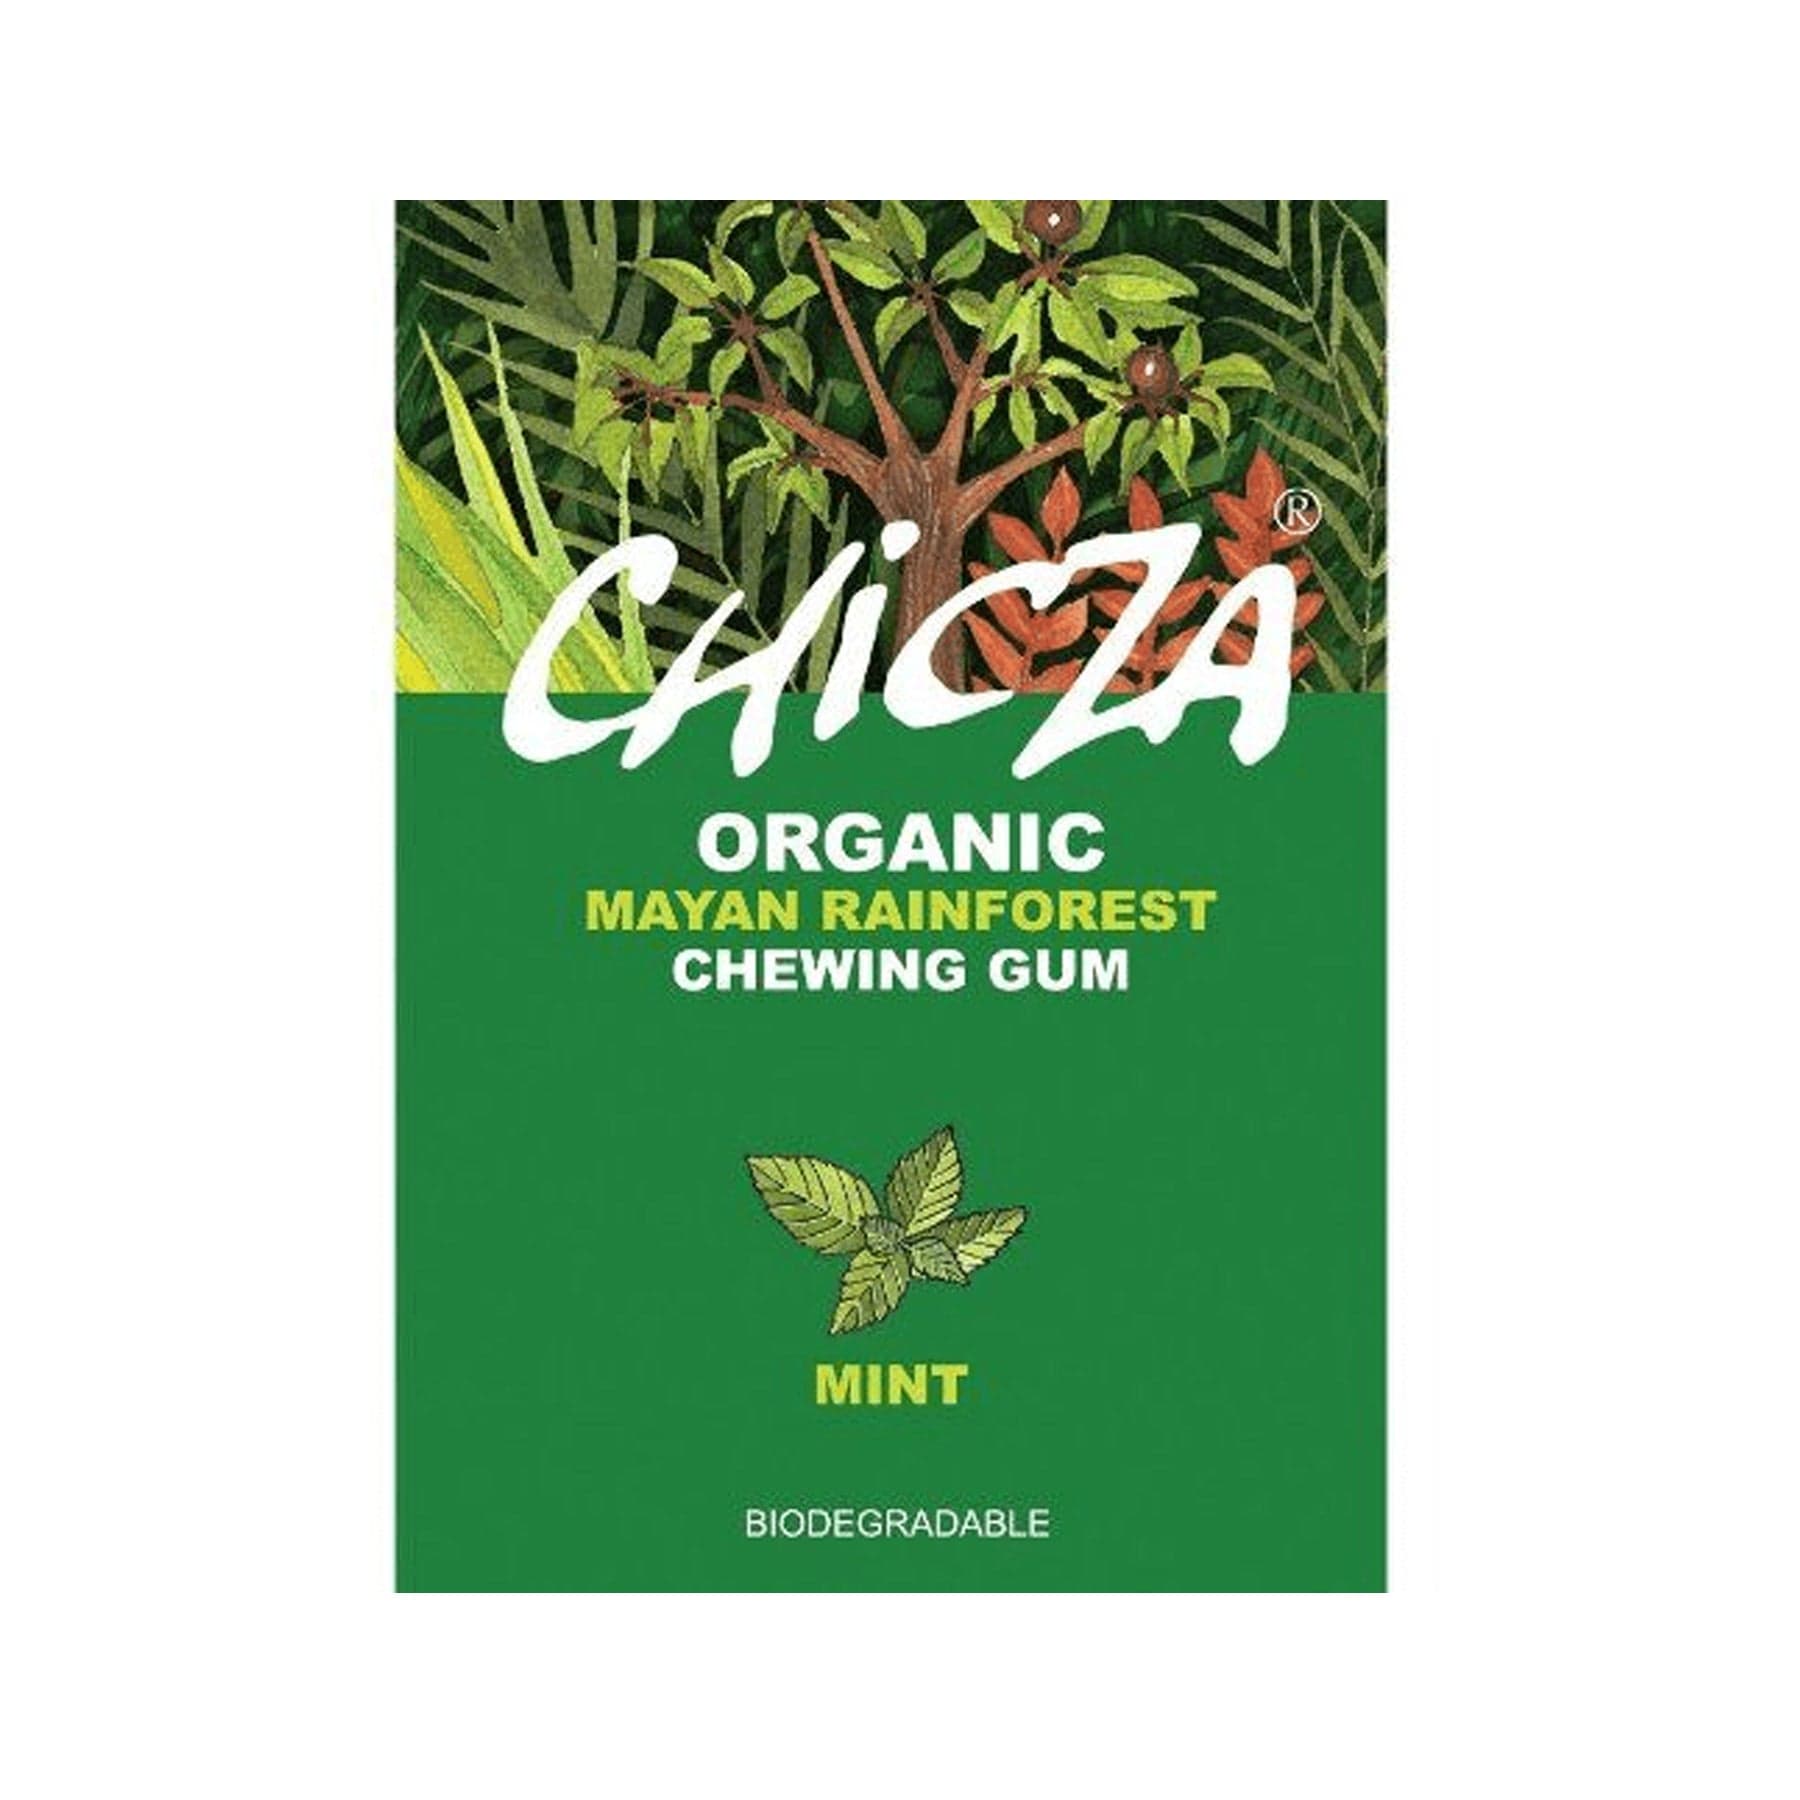 Chicza organic mint chewing gum 30g